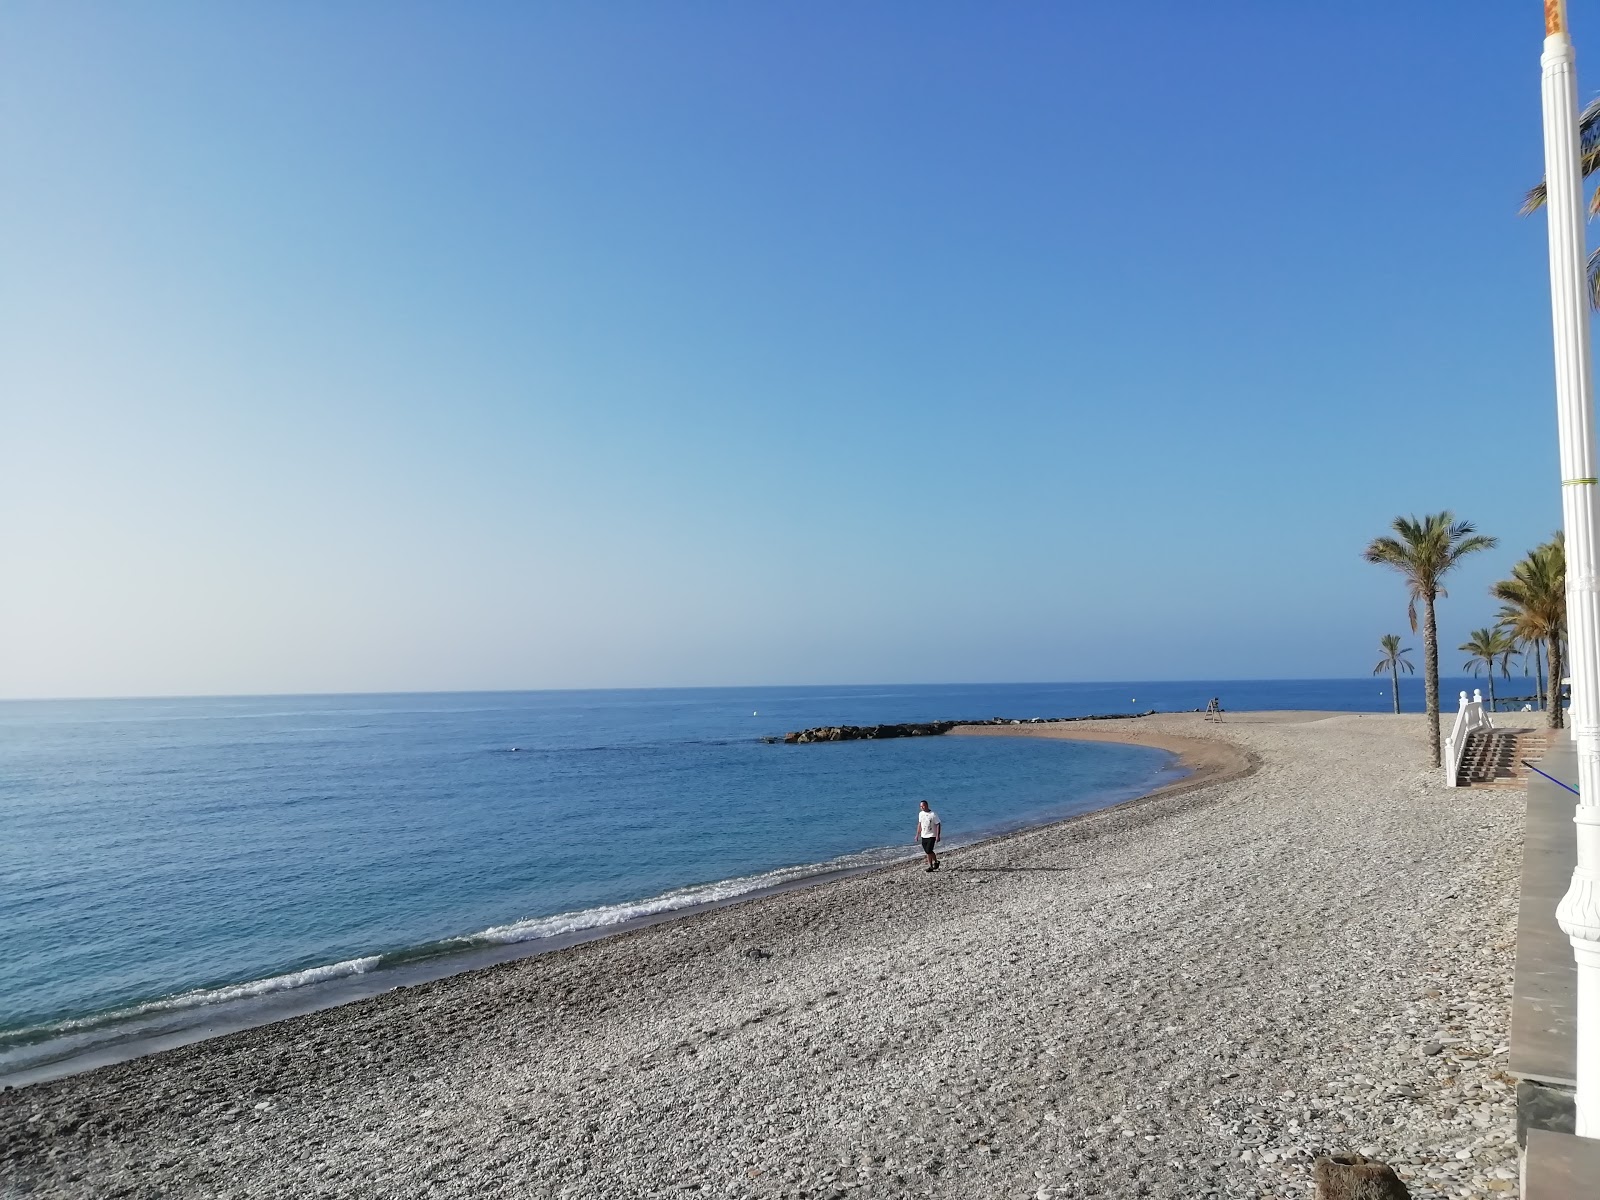 Playa Castell del Ferro'in fotoğrafı orta koylar ile birlikte